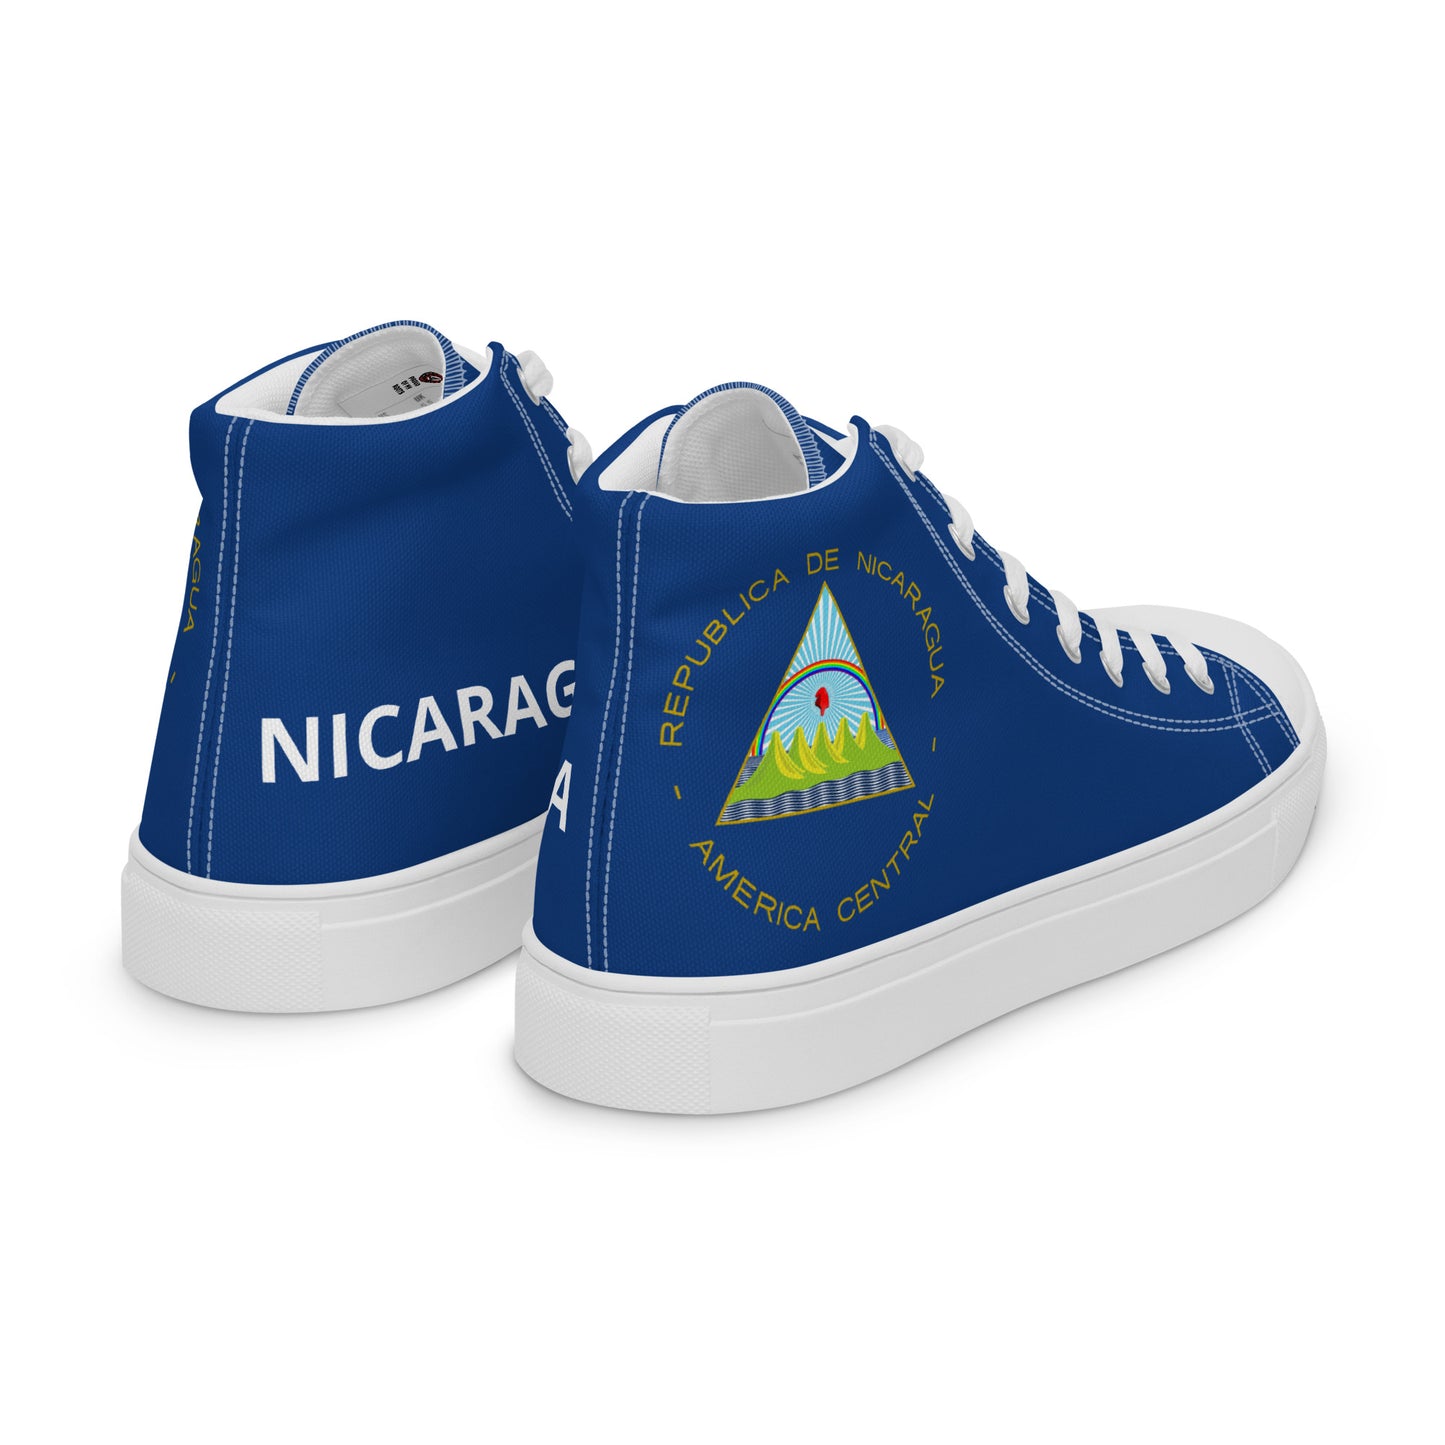 Nicaragua - Men - Blue - High top shoes